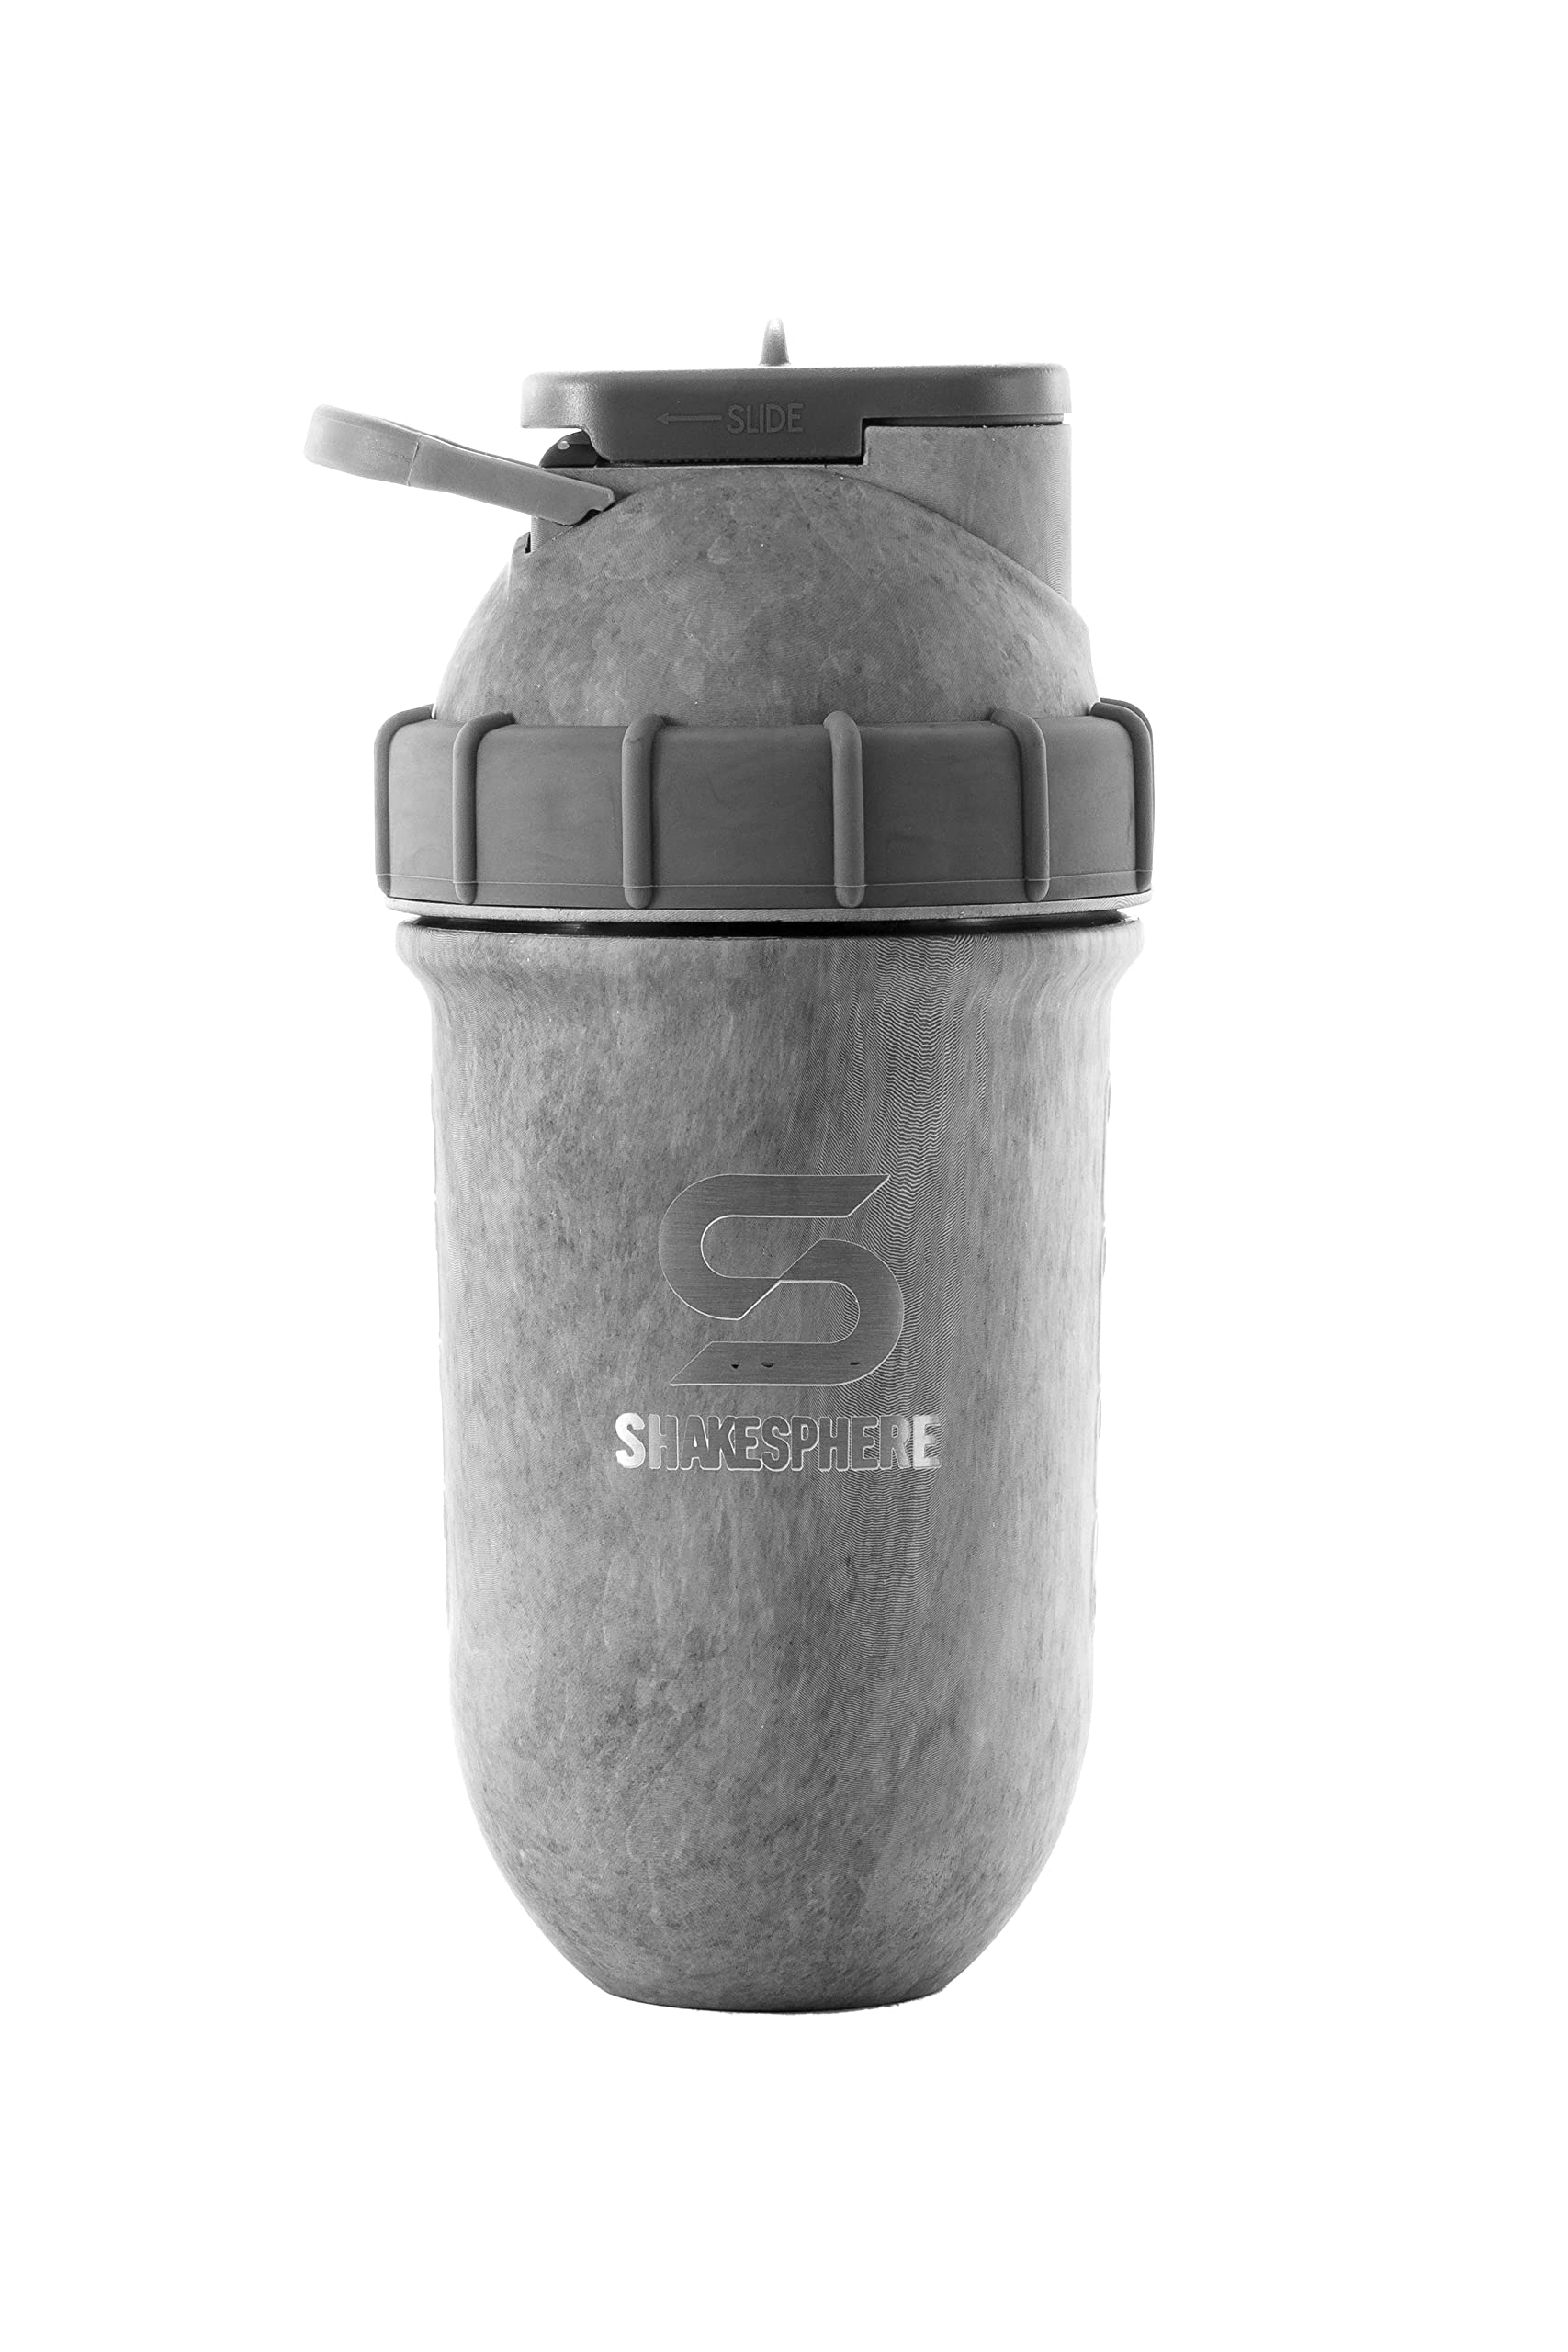 SHAKESPHERE Tumbler STEEL: Protein Shaker Bottle Keeps Hot Drinks